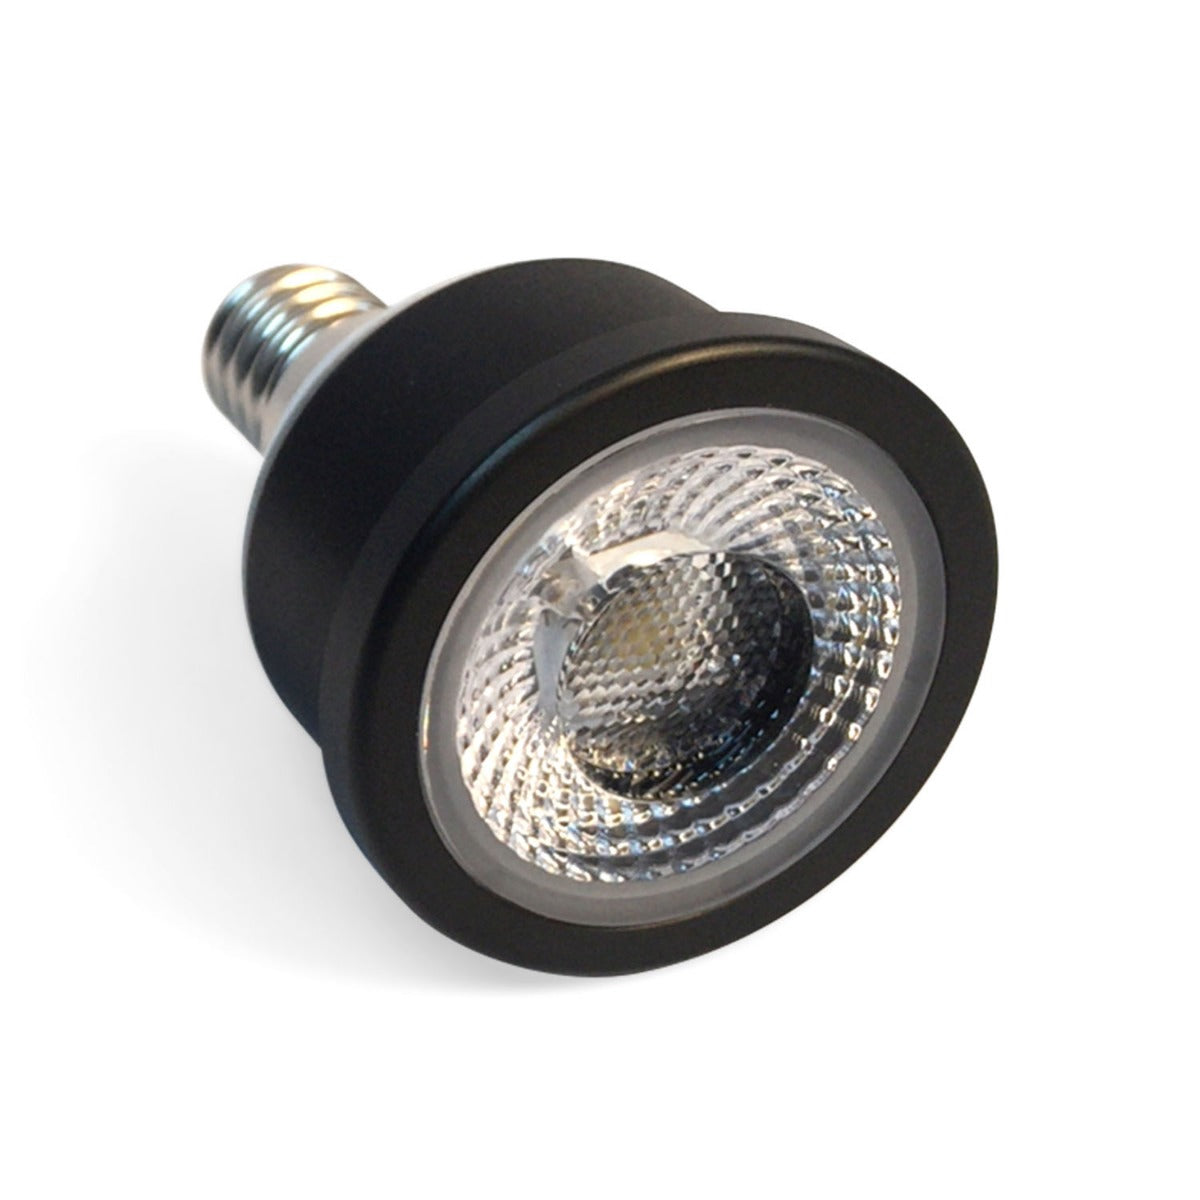 SR Aquaristik  Luminarium Replacement Bulb (1w Super Bright)